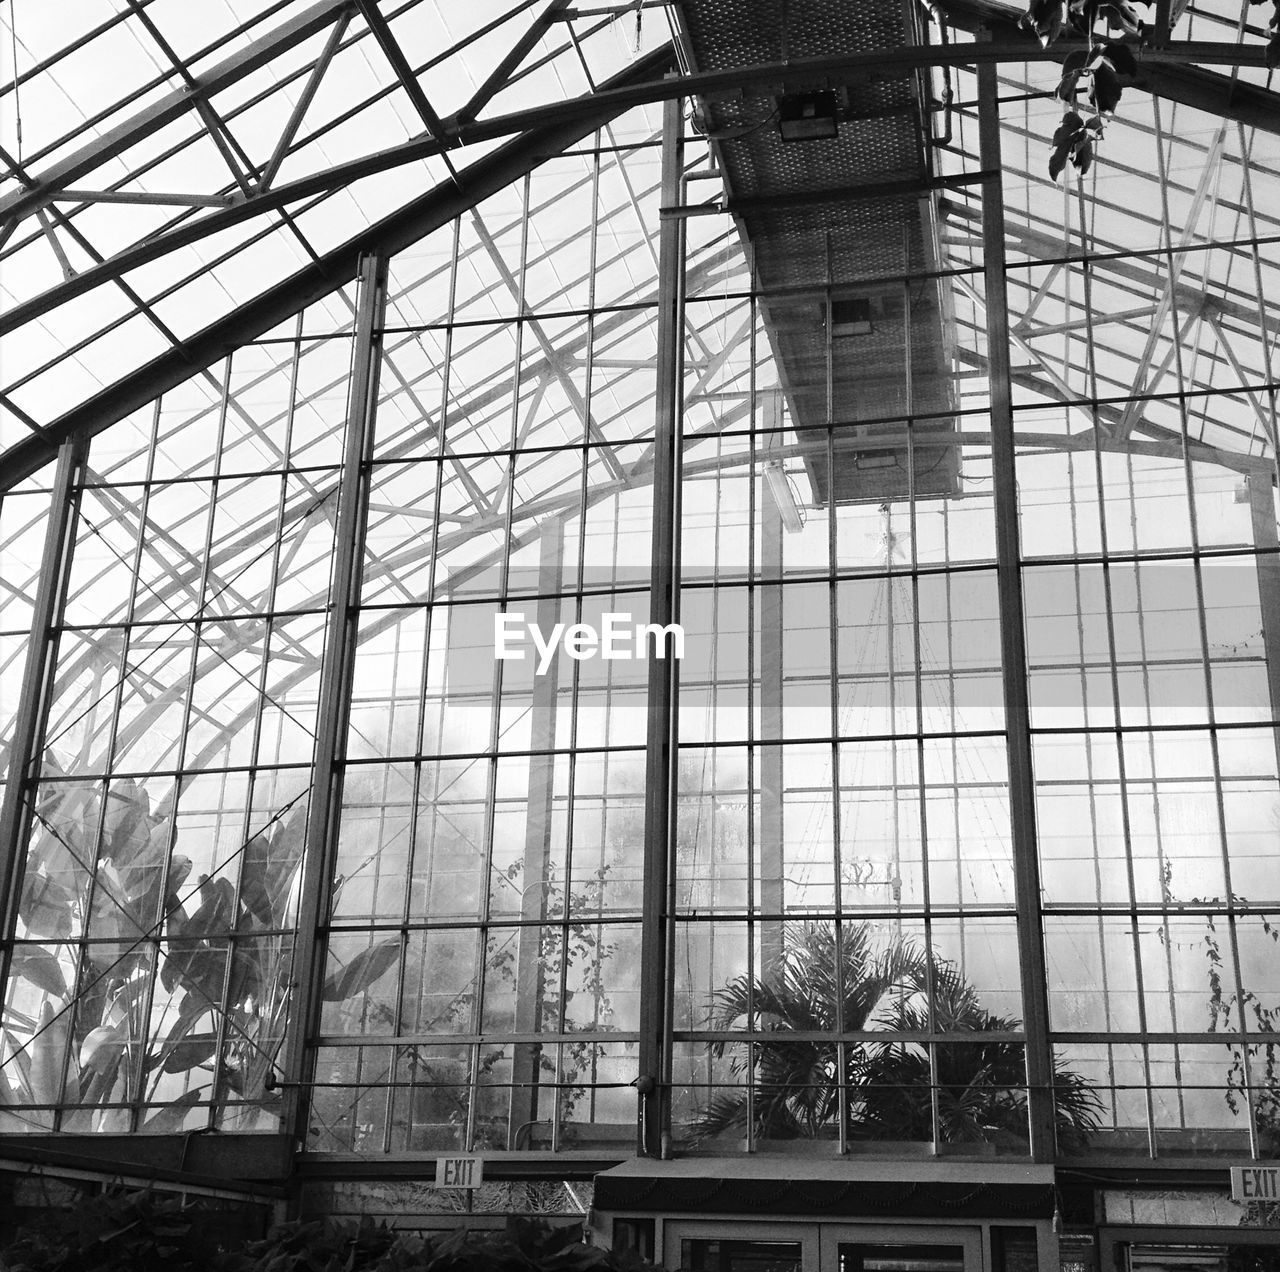 Interior of greenhouse